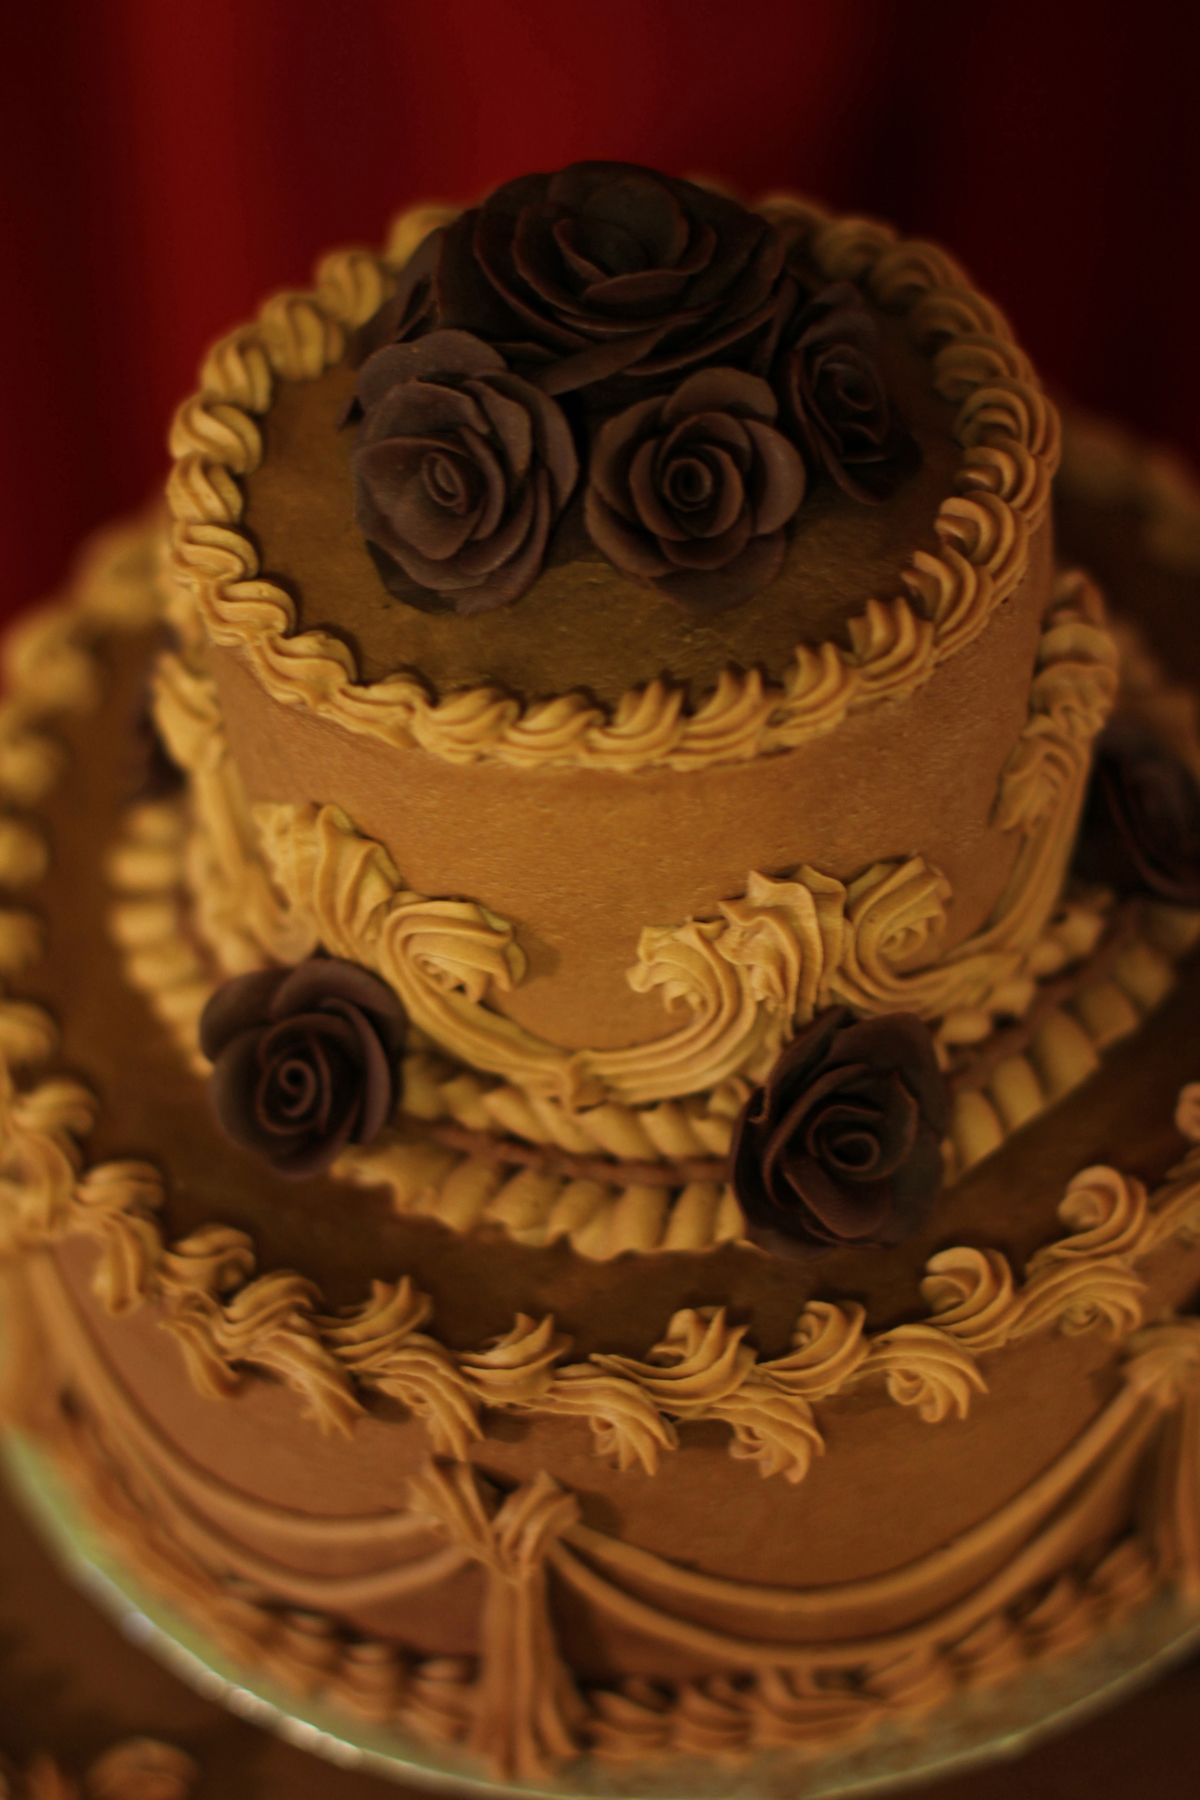 Caroline's chocolate party - big chocolate cake for celebrations -  www.kvalifood.com